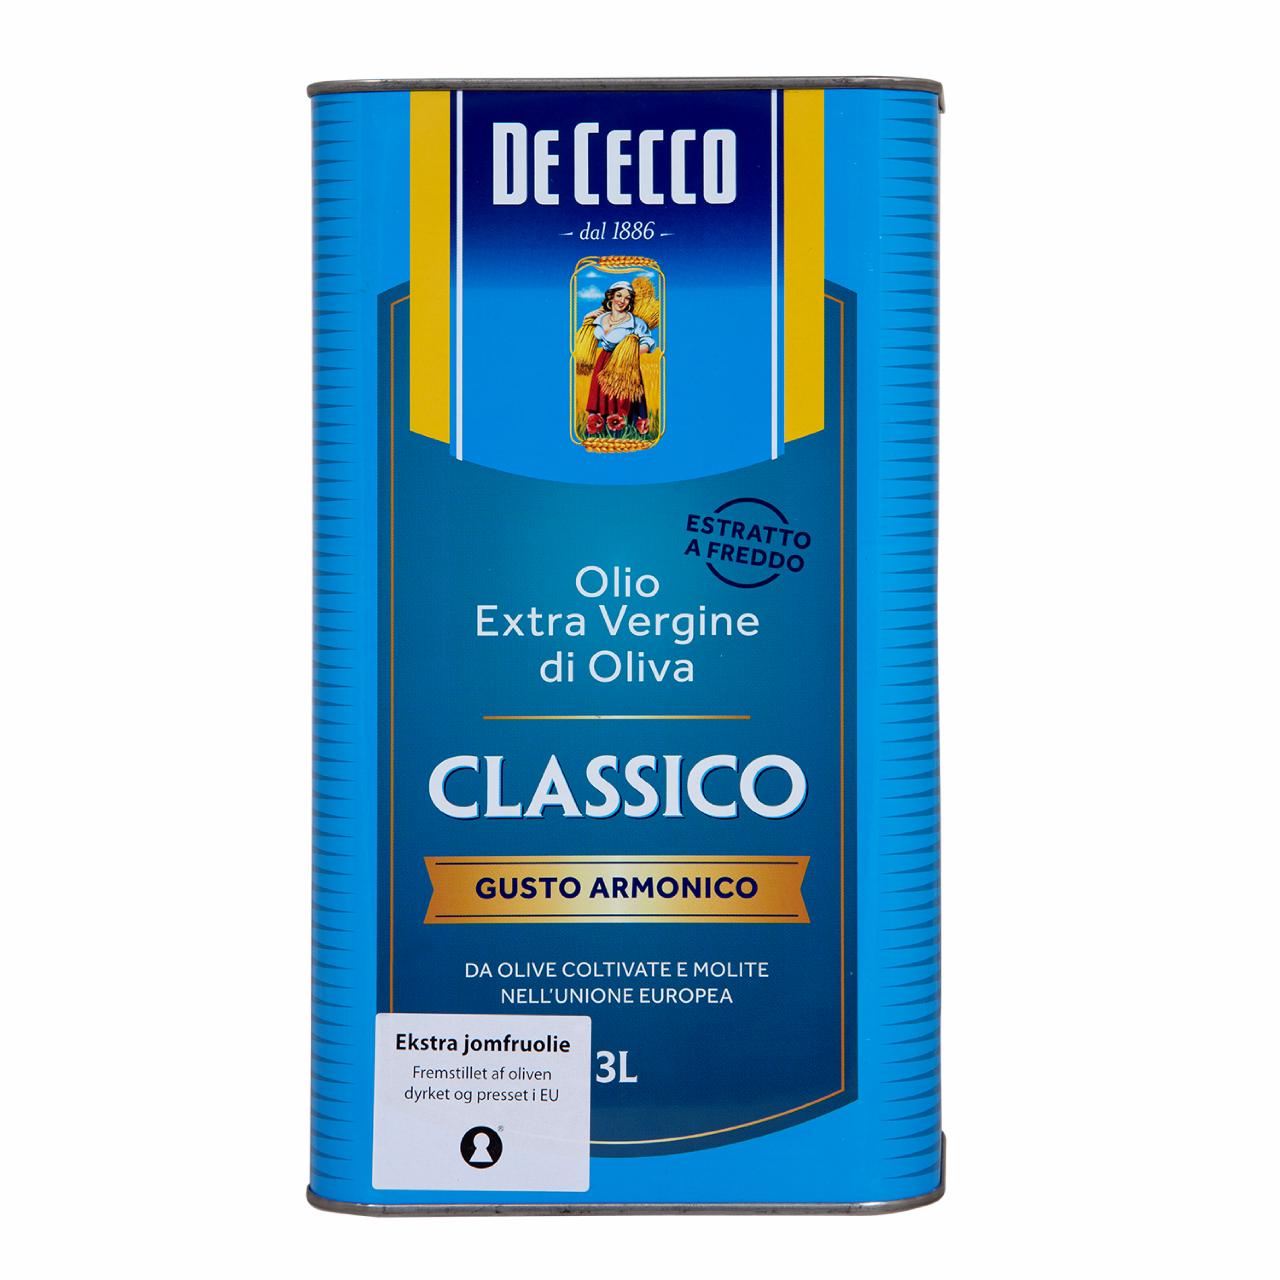 De Cecco Extra Jomfru Olivenolie 4 x 3 liter